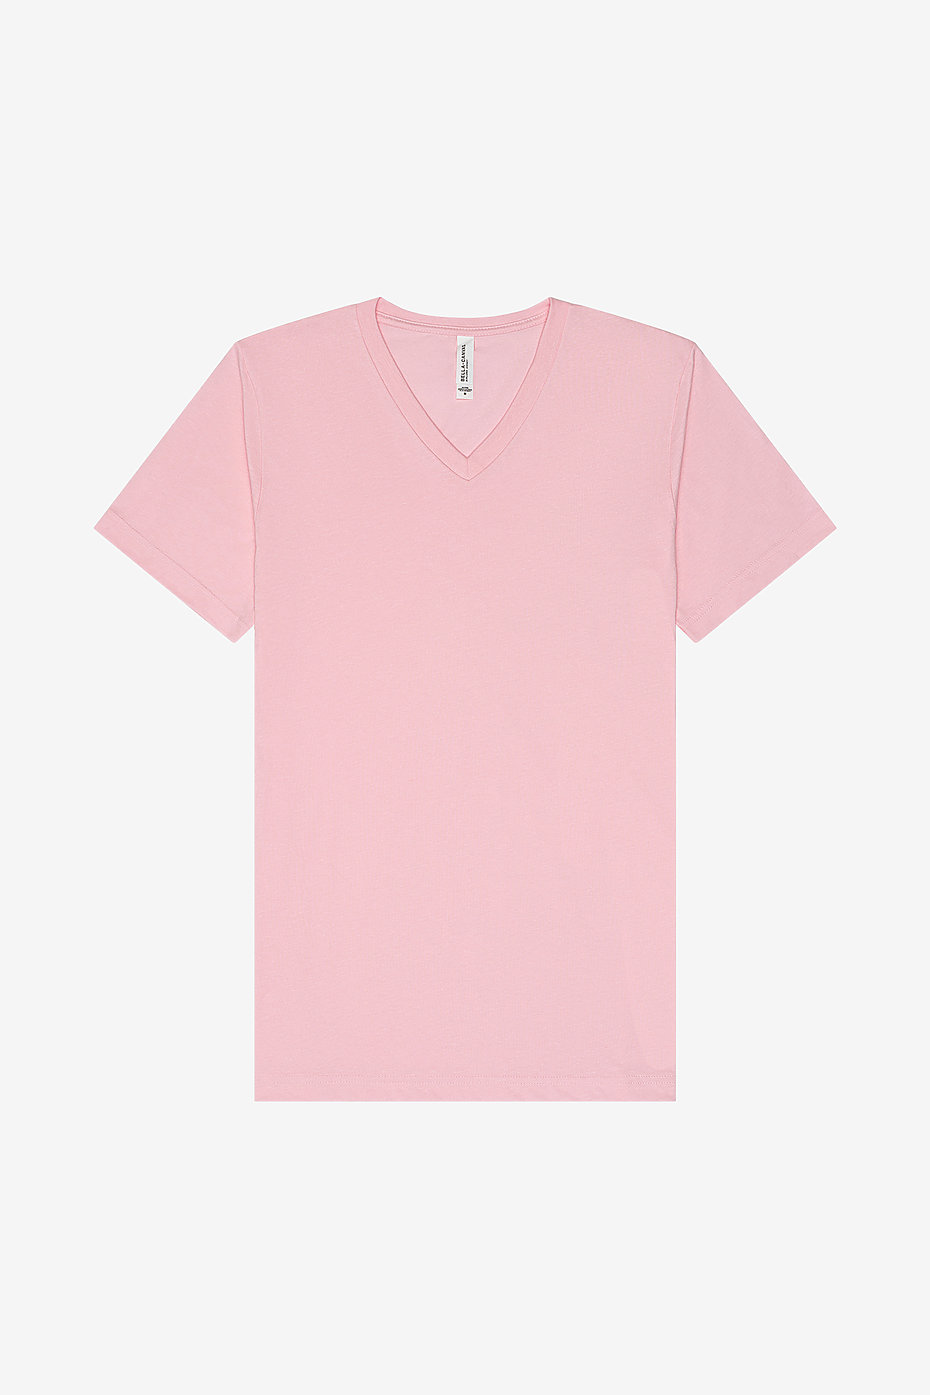 Refresh V-Neck T-Shirt - Soft Pink, Women's T-Shirts